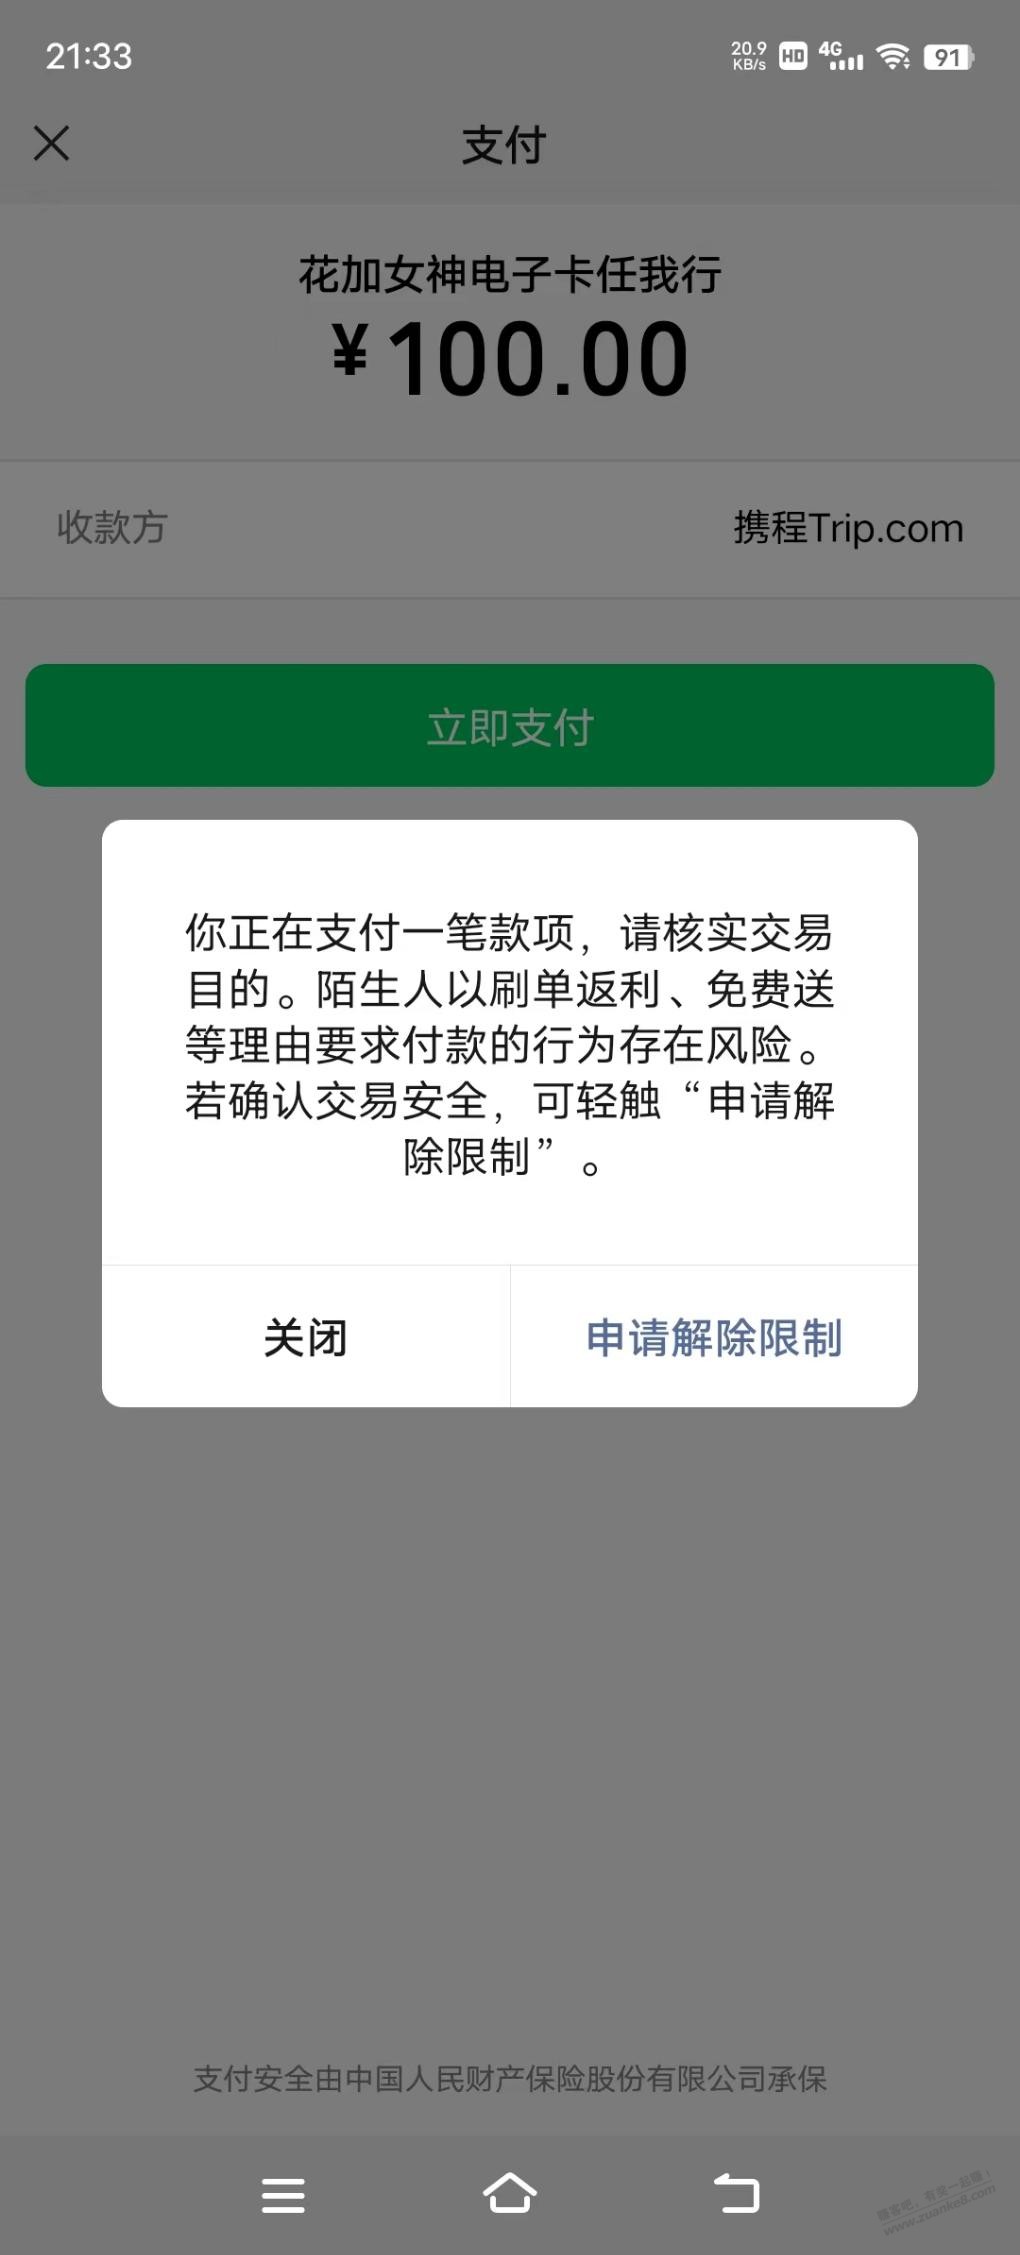 wx买携程卡被限制了。-惠小助(52huixz.com)